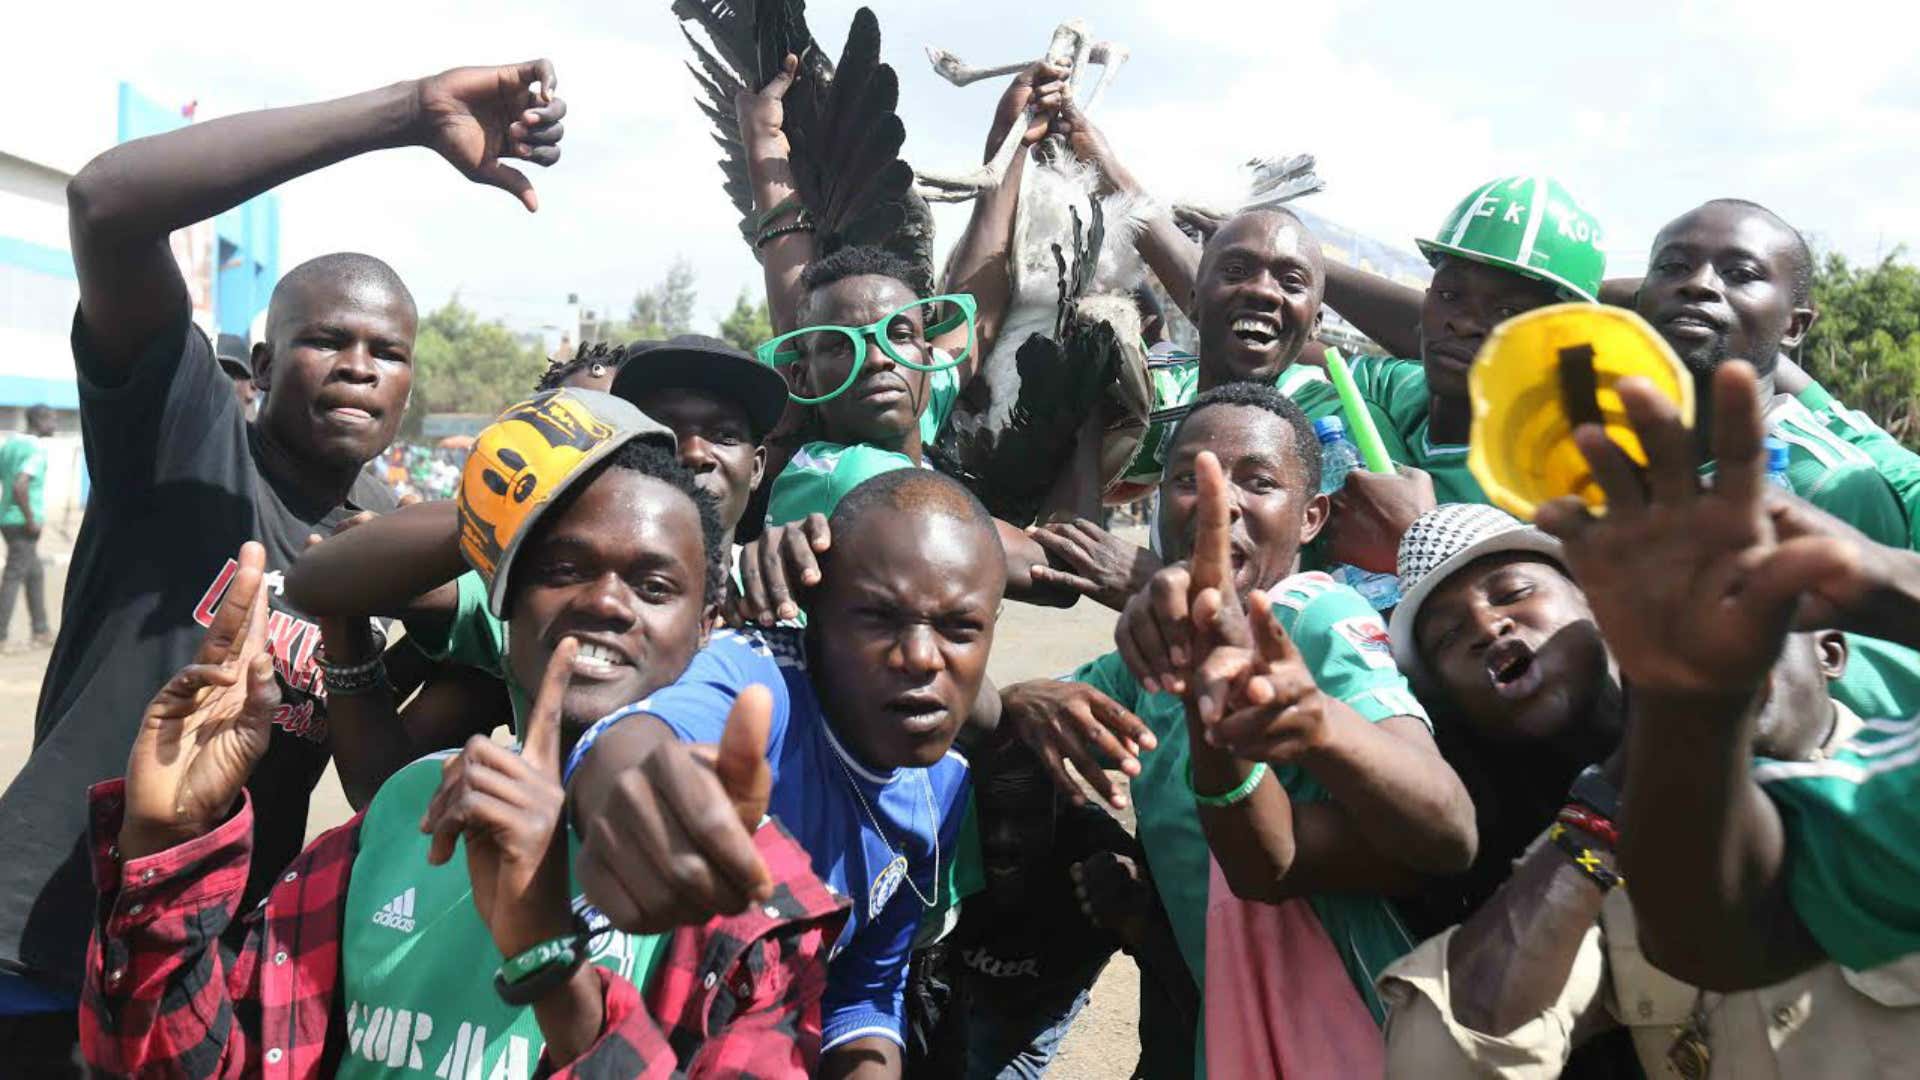 Gor Mahia fans outside Nyayo Stadium before the game kicked off